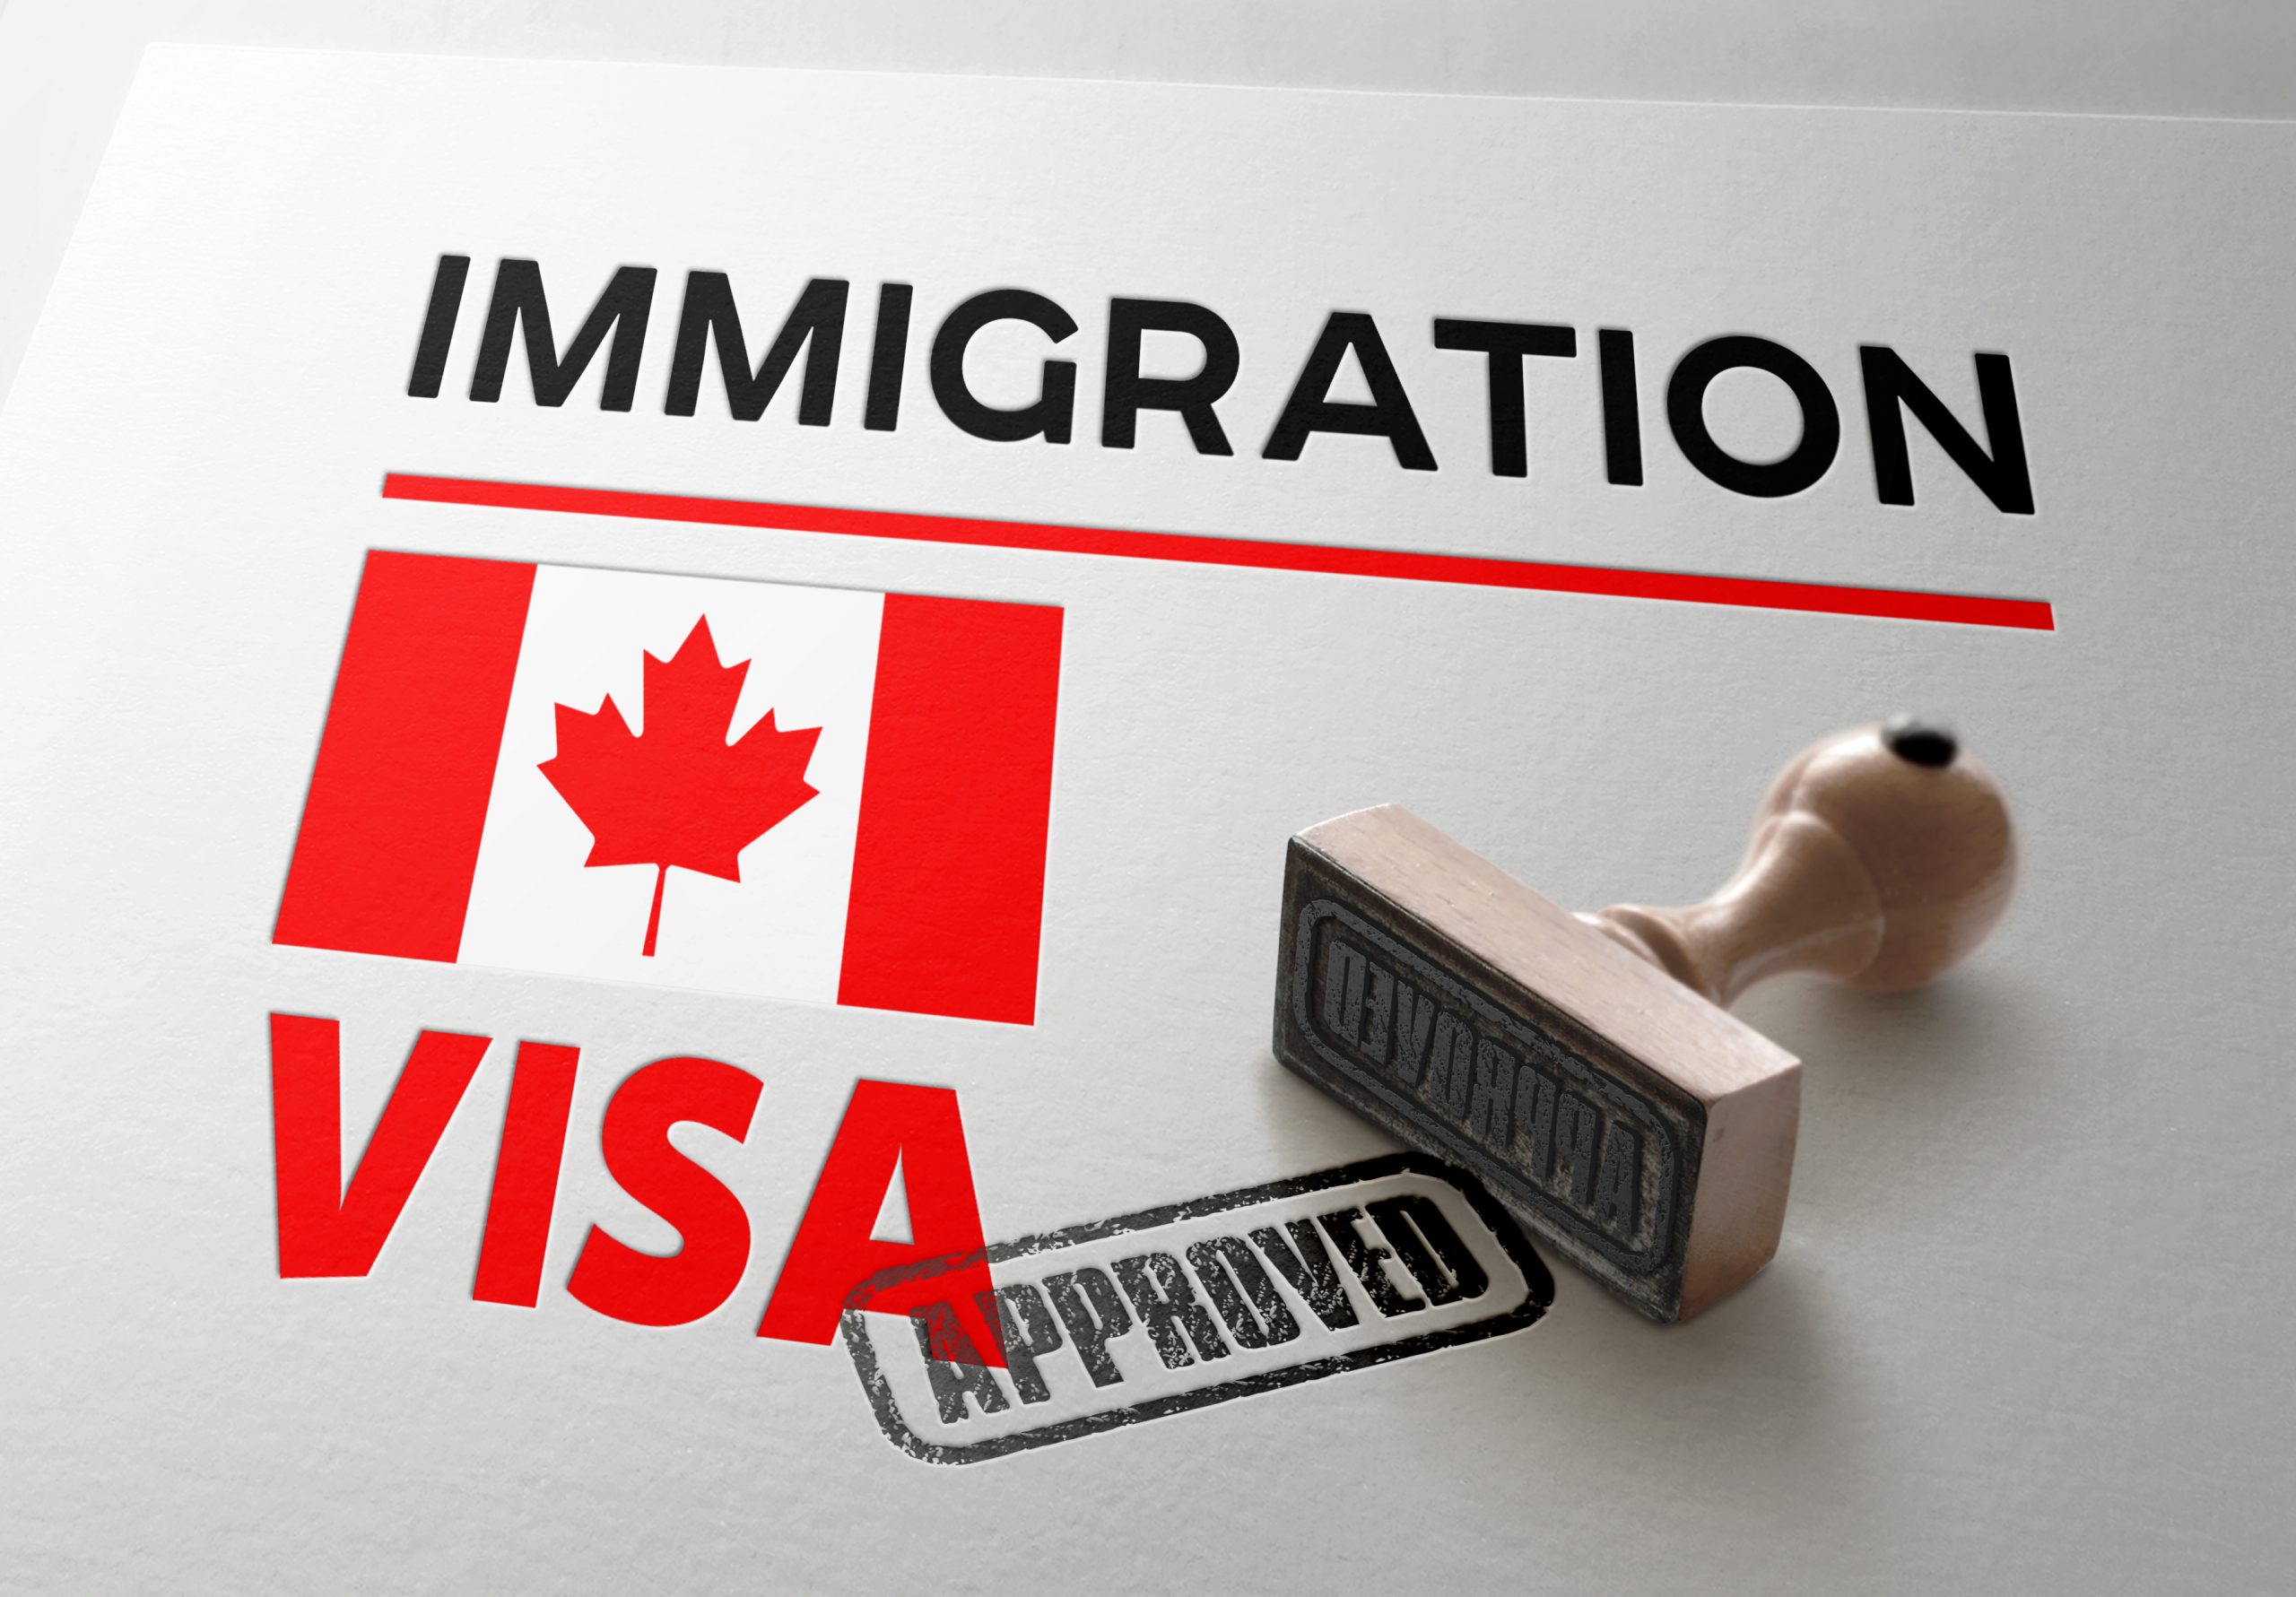 Immigration stamp of visa approval